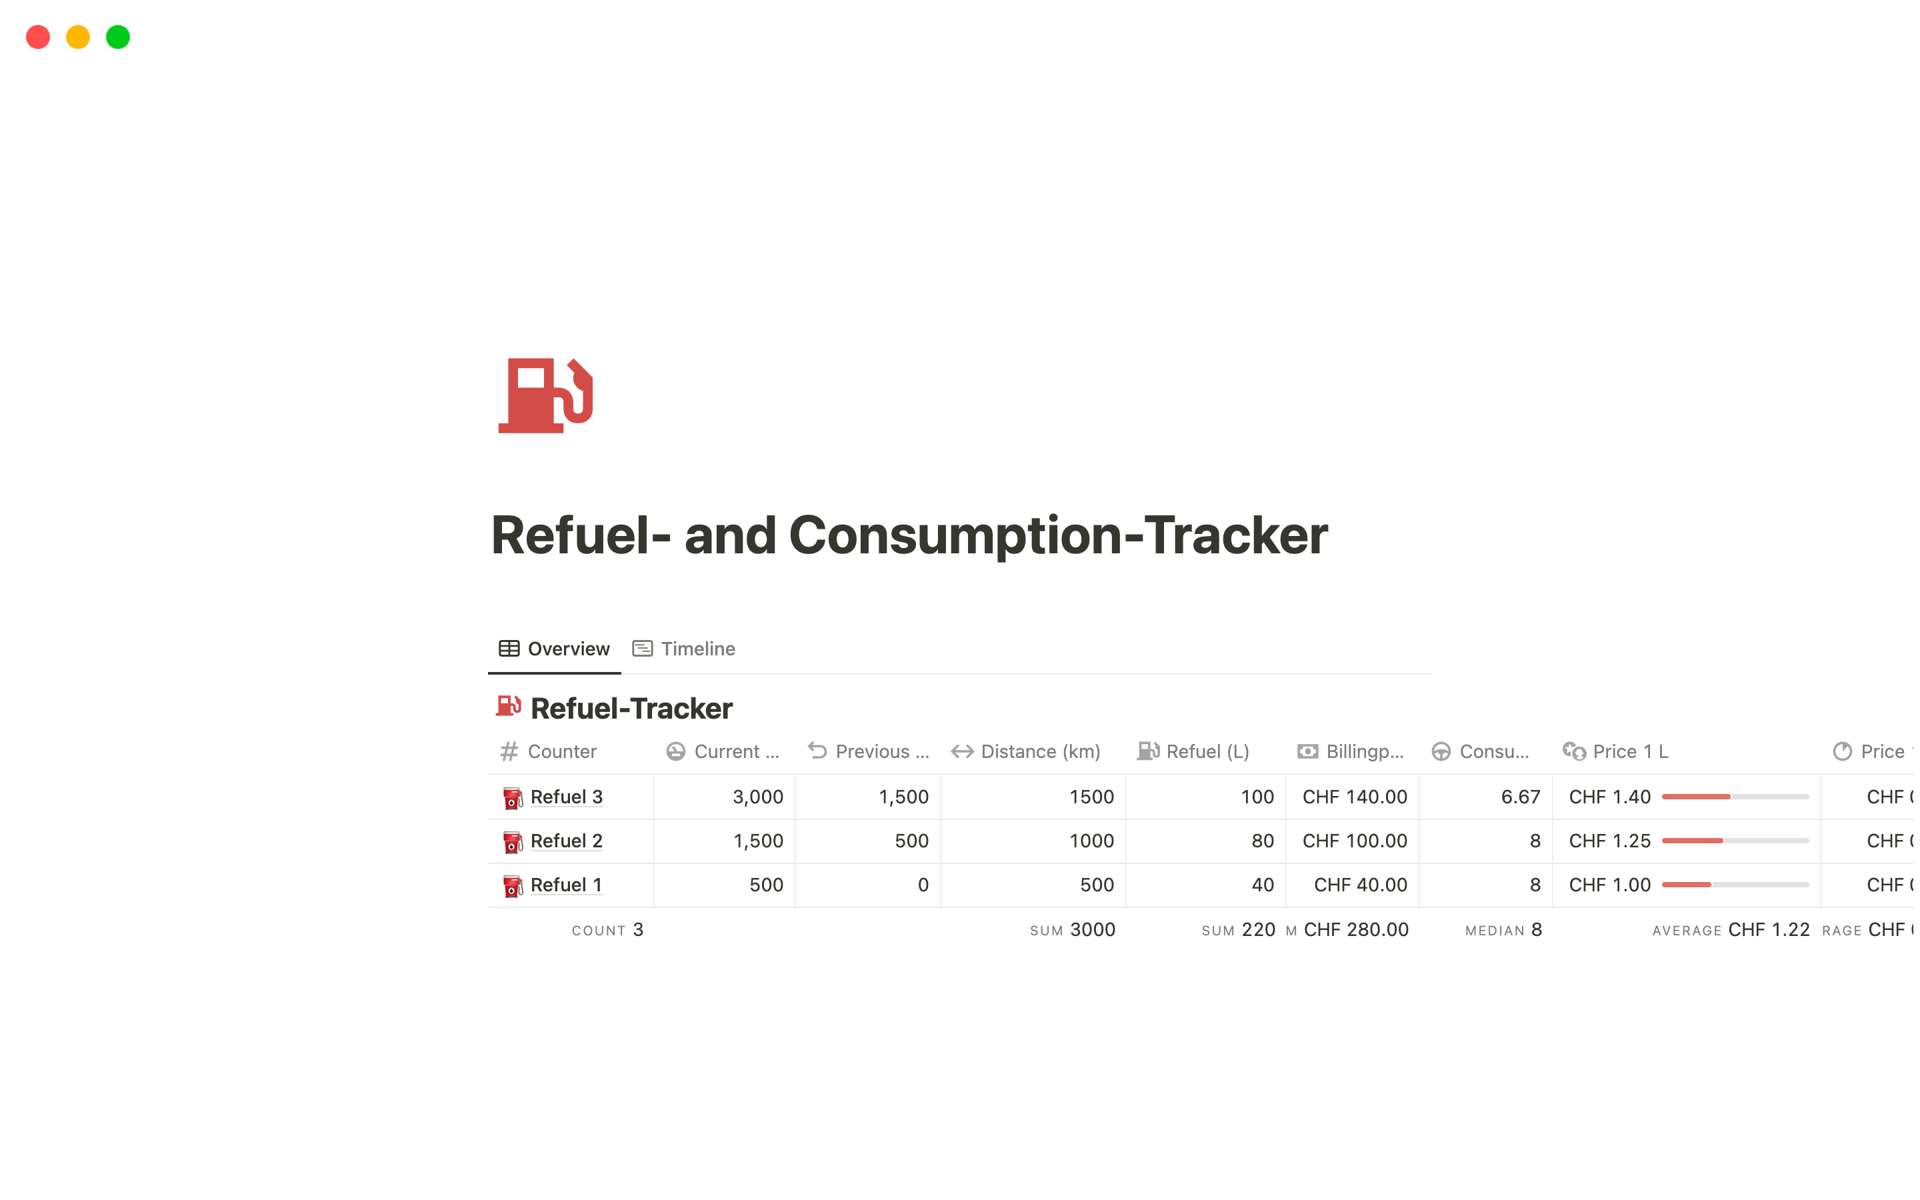 Vista previa de plantilla para Refuel- and Consumption-Tracker